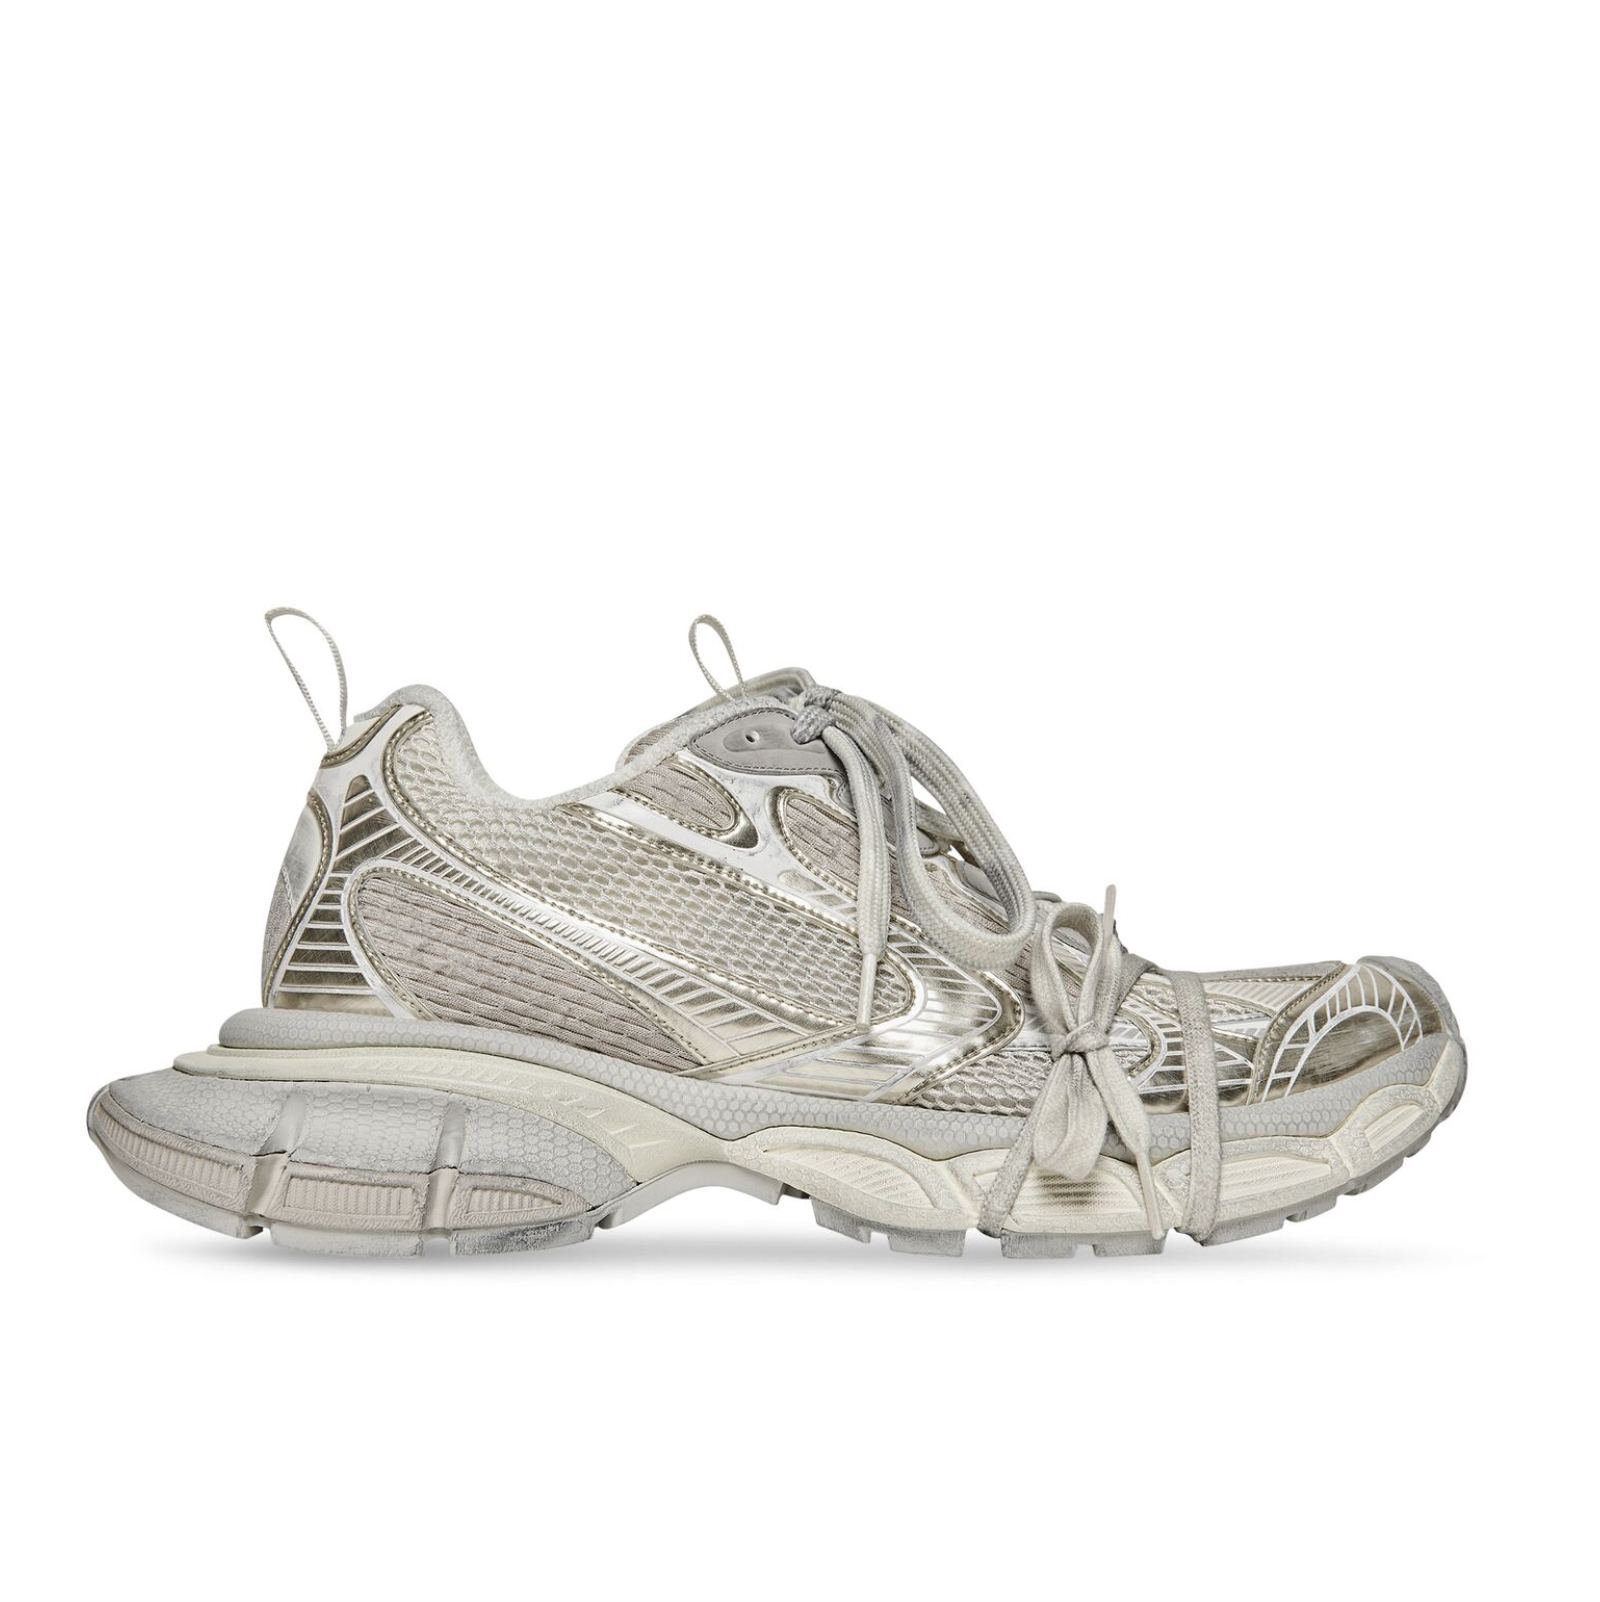 3XL Sneakers in off white colorway Designer Sneakers – RADPRESENT